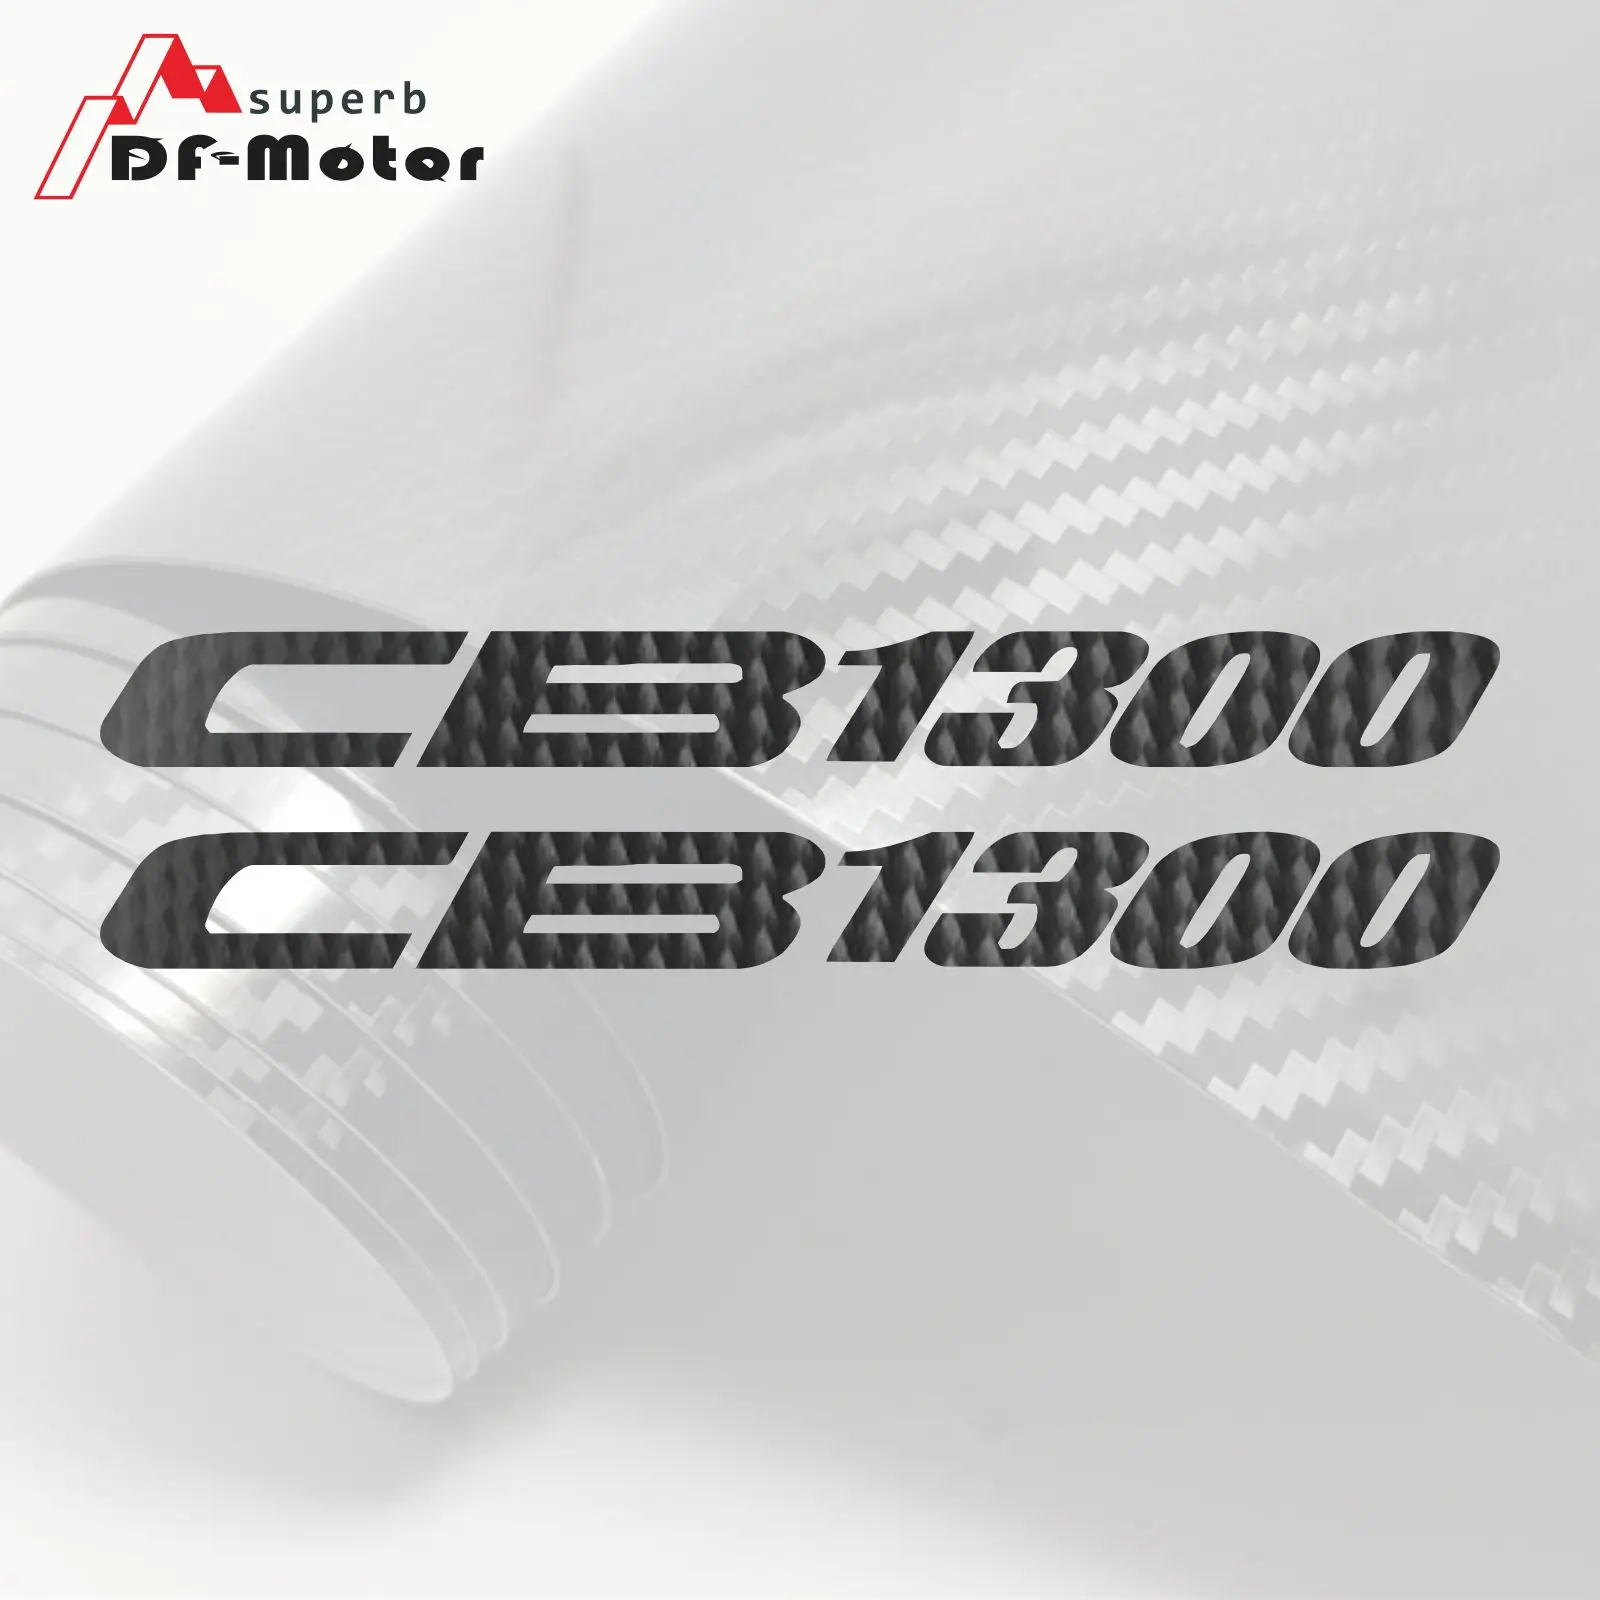 

8Inch 5D Carbon Fiber Sticker Decal Motorcycle Car Sticker Wheels Fairing Helmet Sticker DIY Fit for Honda CB1300 CB 1300